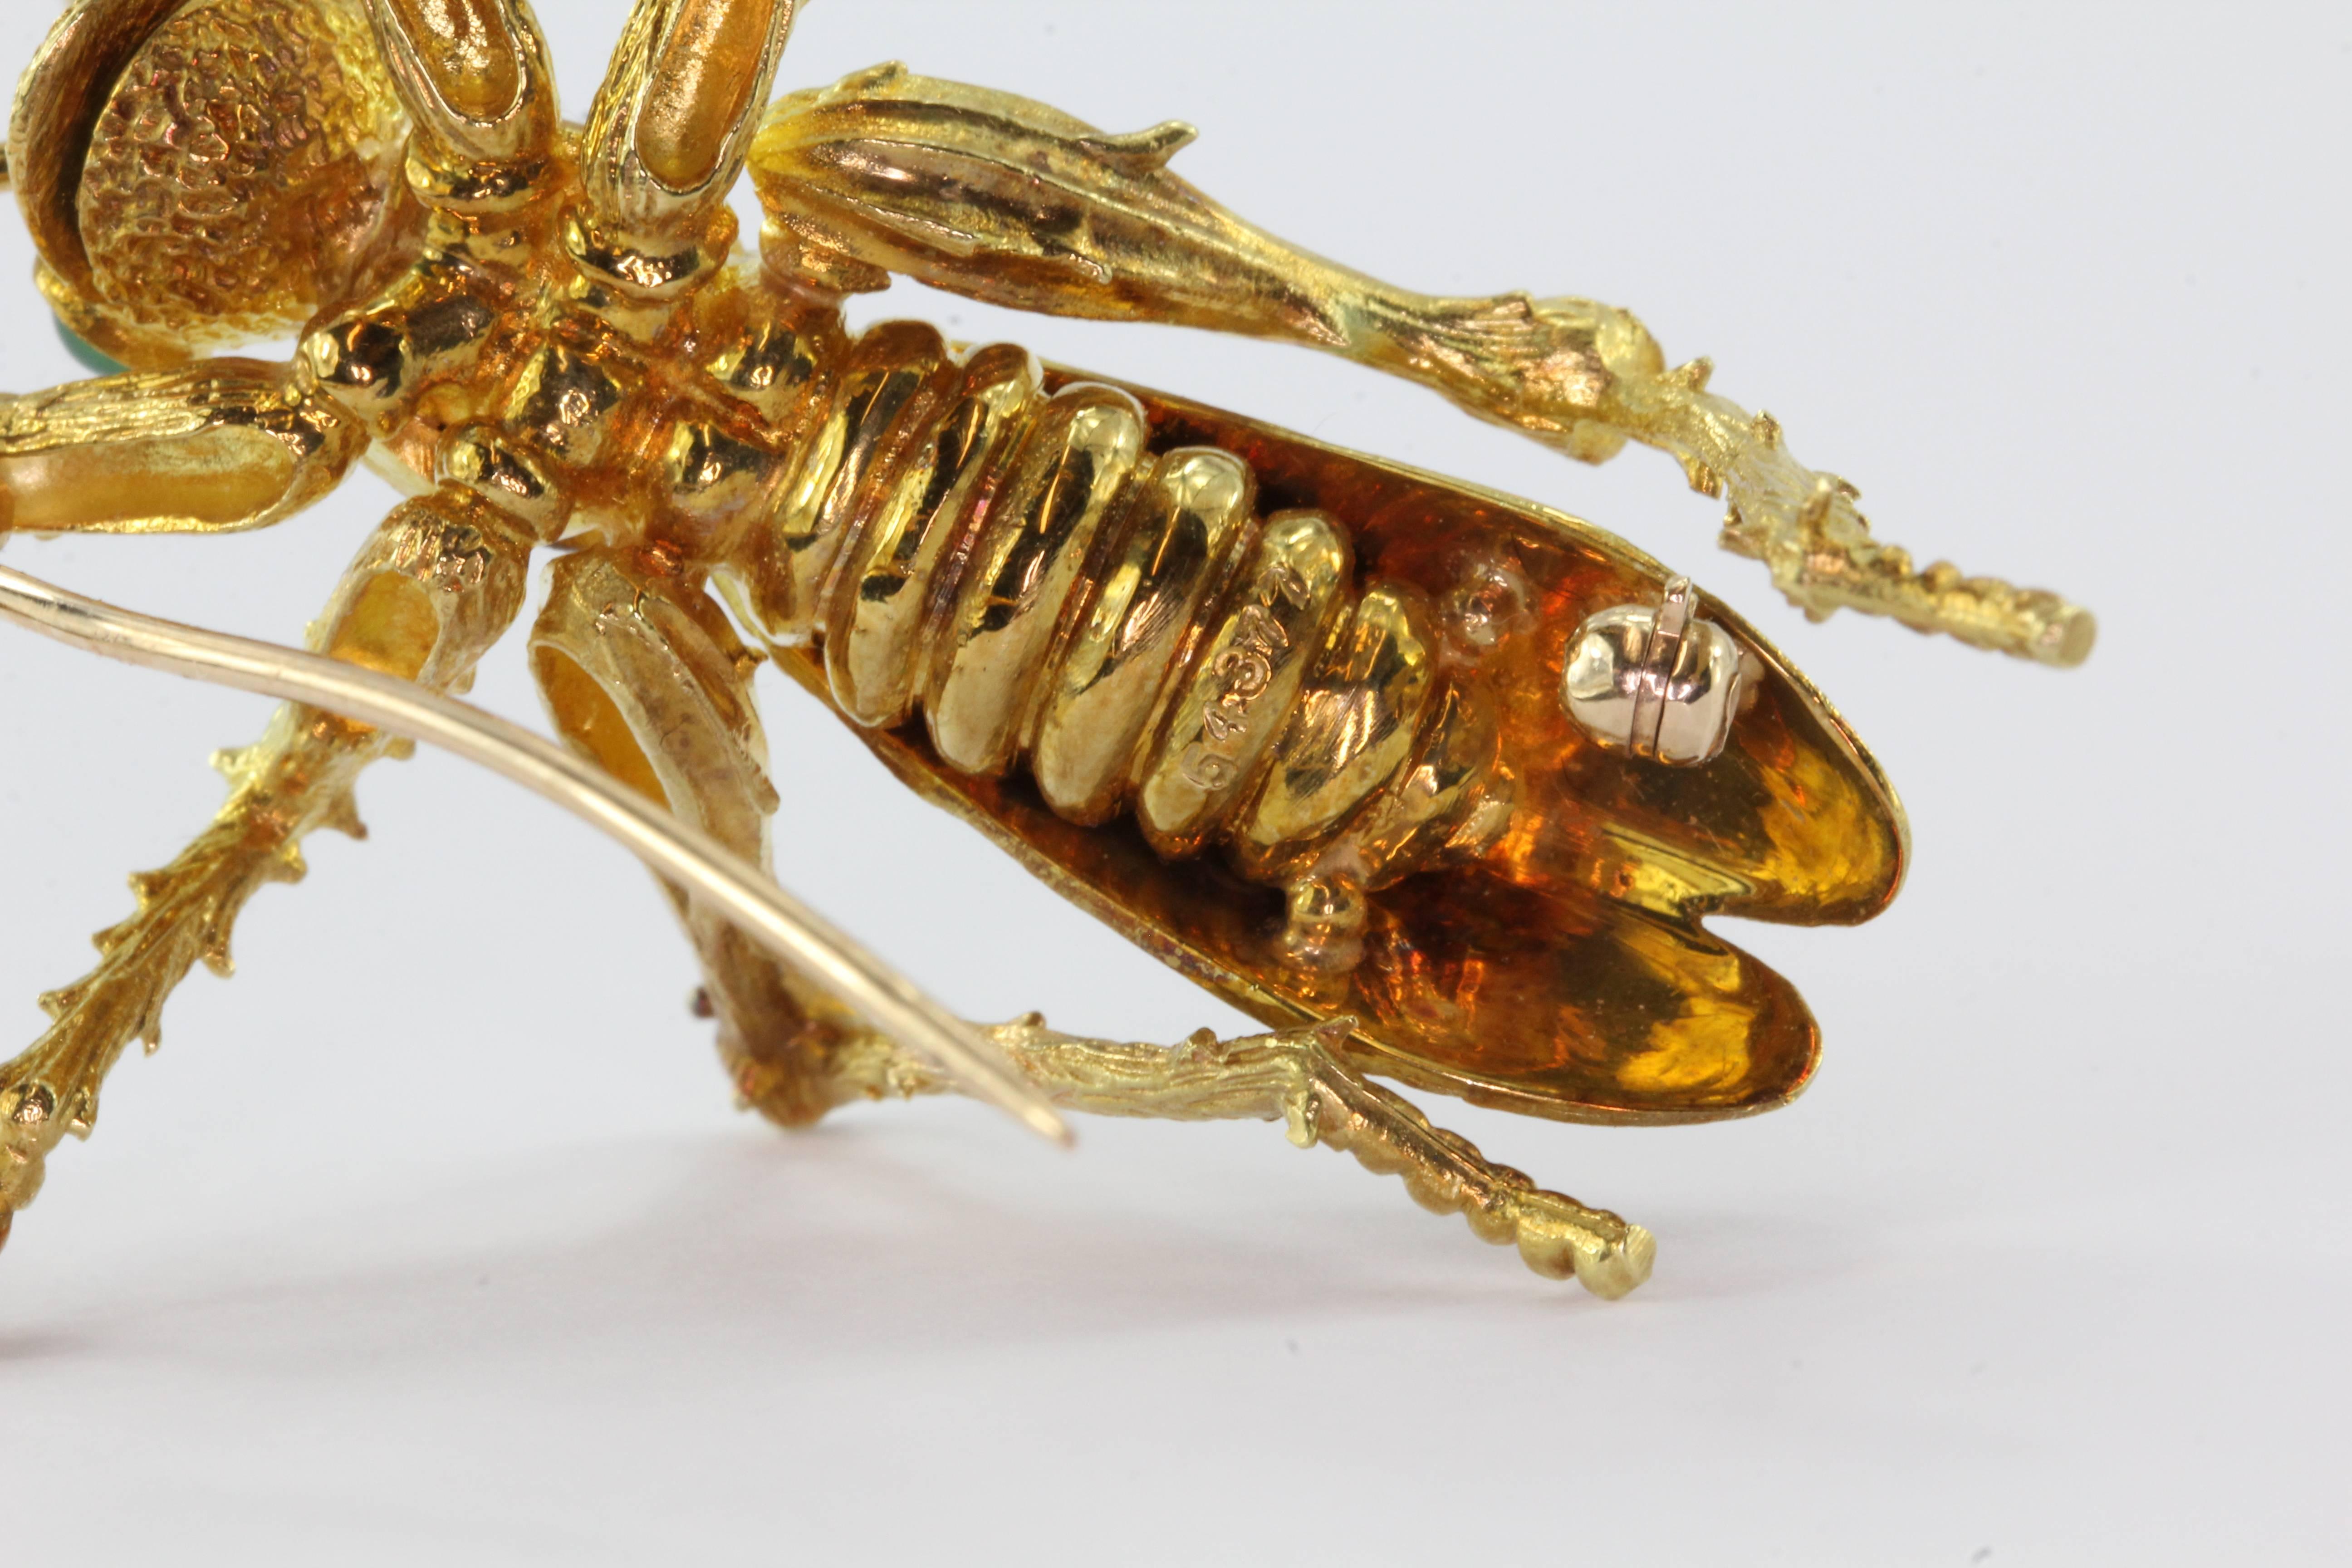  Kurt Wayne Emerald Gold Naturalistic Grasshopper Brooch Pin 1